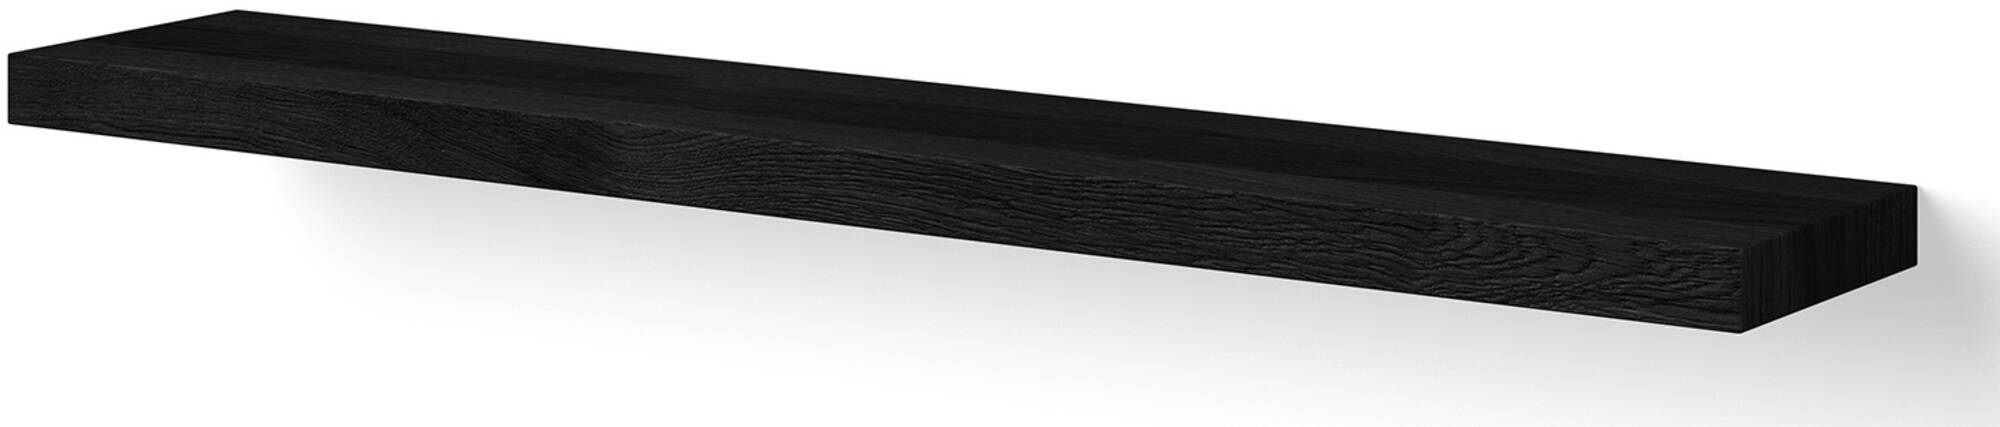 Looox Wooden Wall Shelf Free Planchet 80x15x4 cm Black